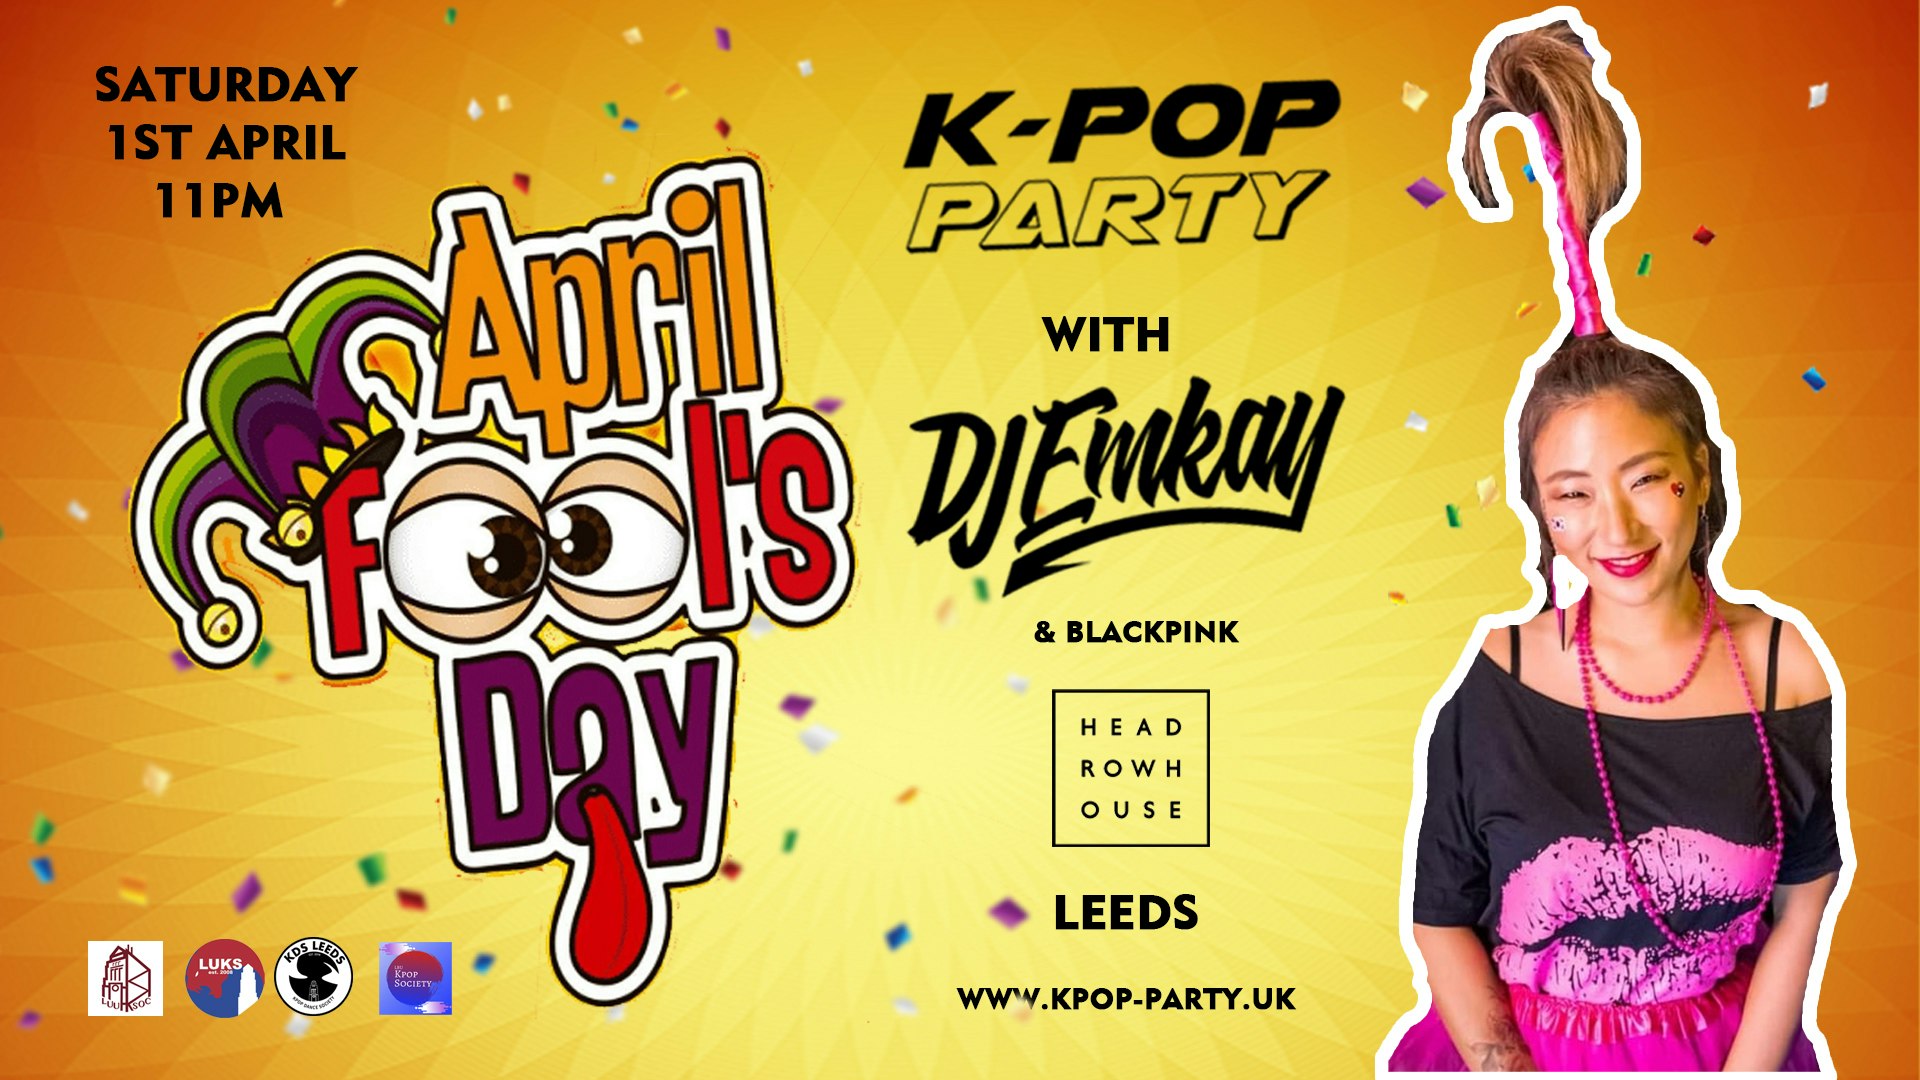 K-Pop Party Leeds: April Fools Day with DJ EMKAY | Saturday 1st April